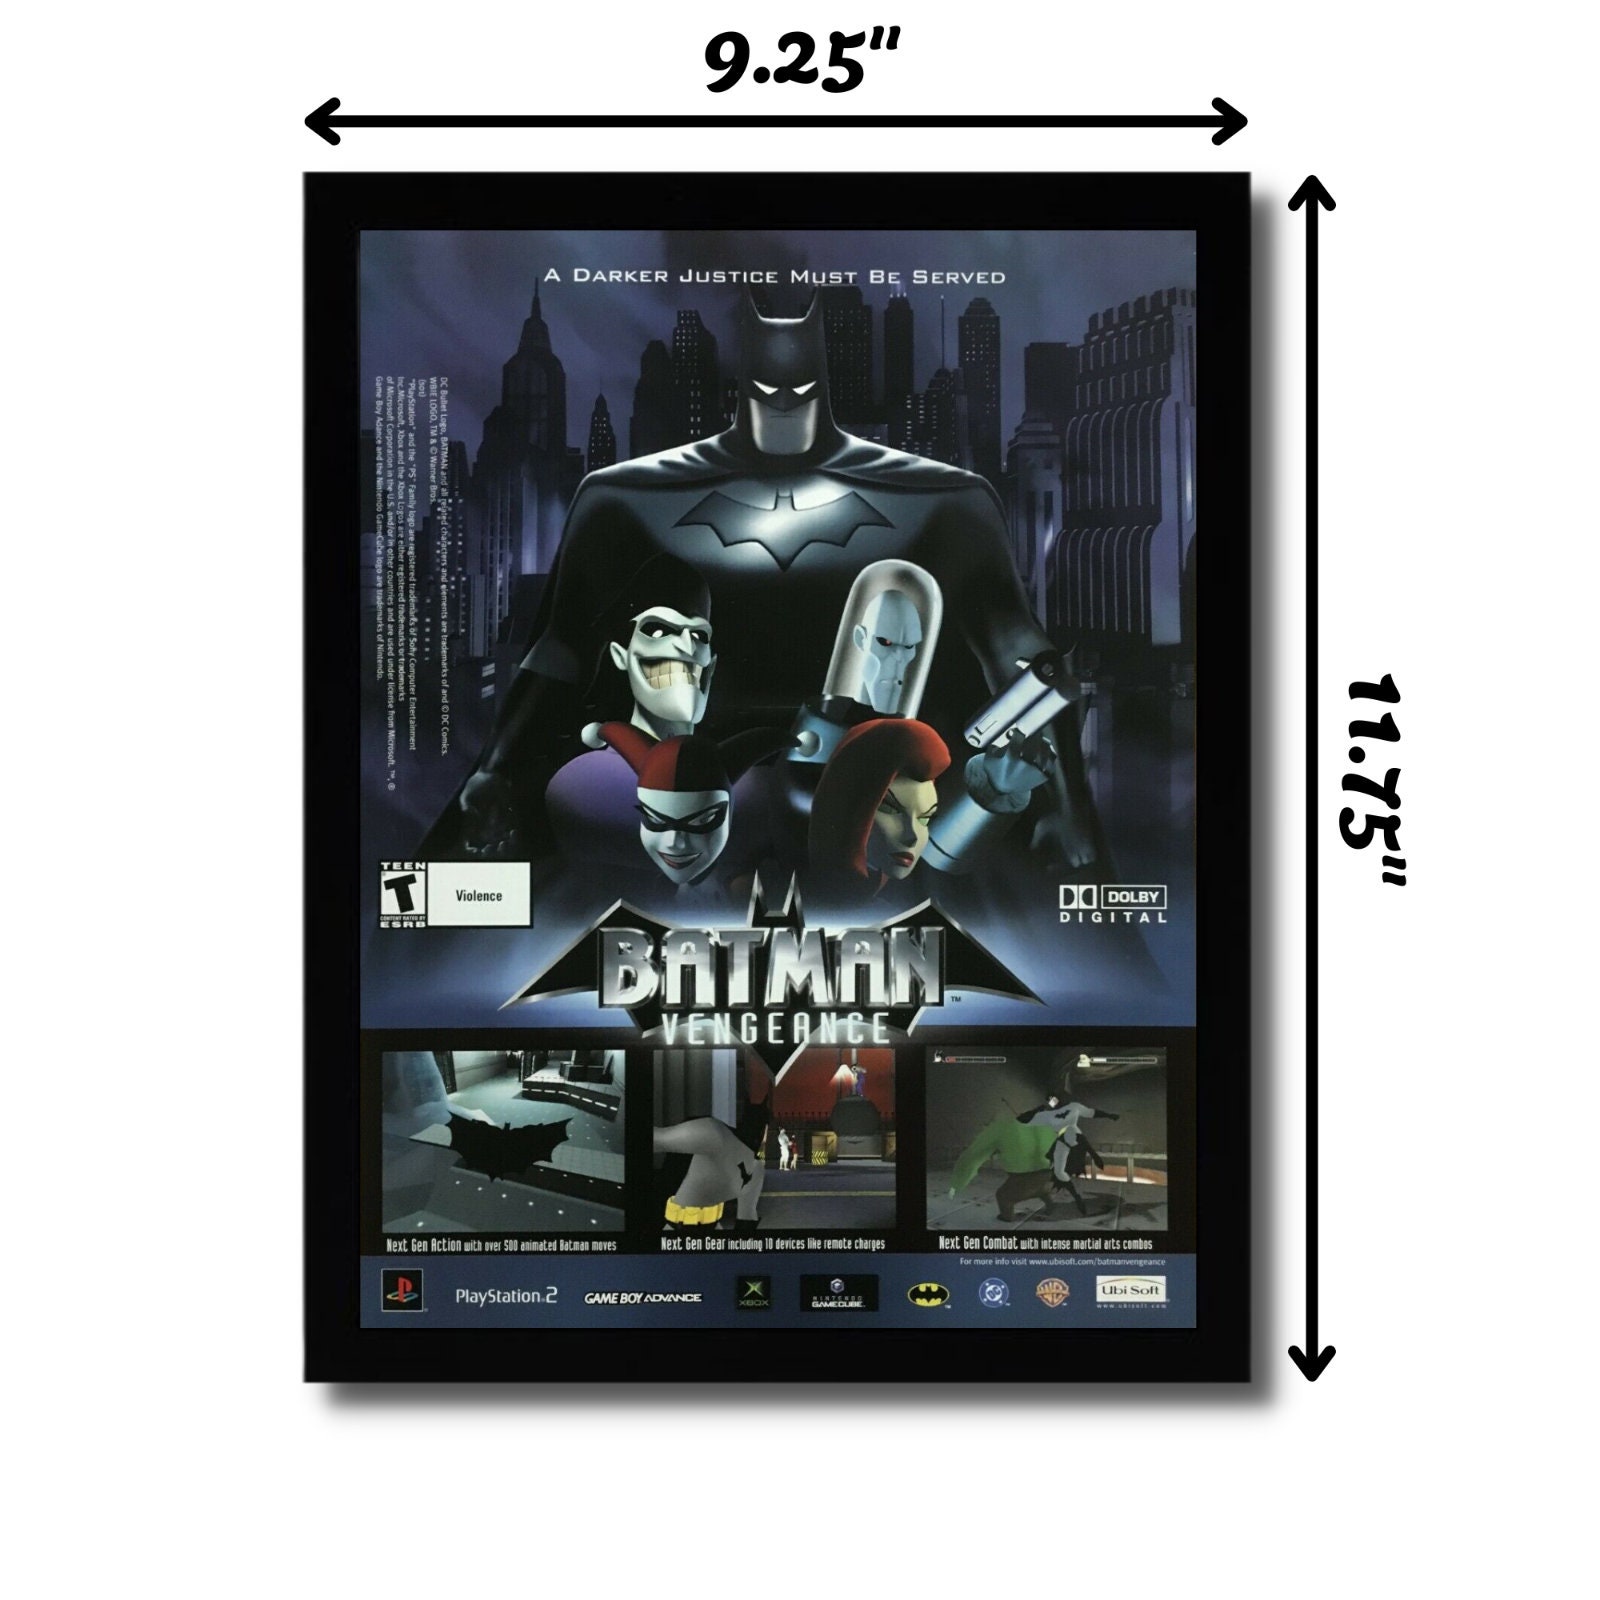 2001 Batman: Vengeance Framed Print Ad/poster PS2 Xbox - Etsy New Zealand